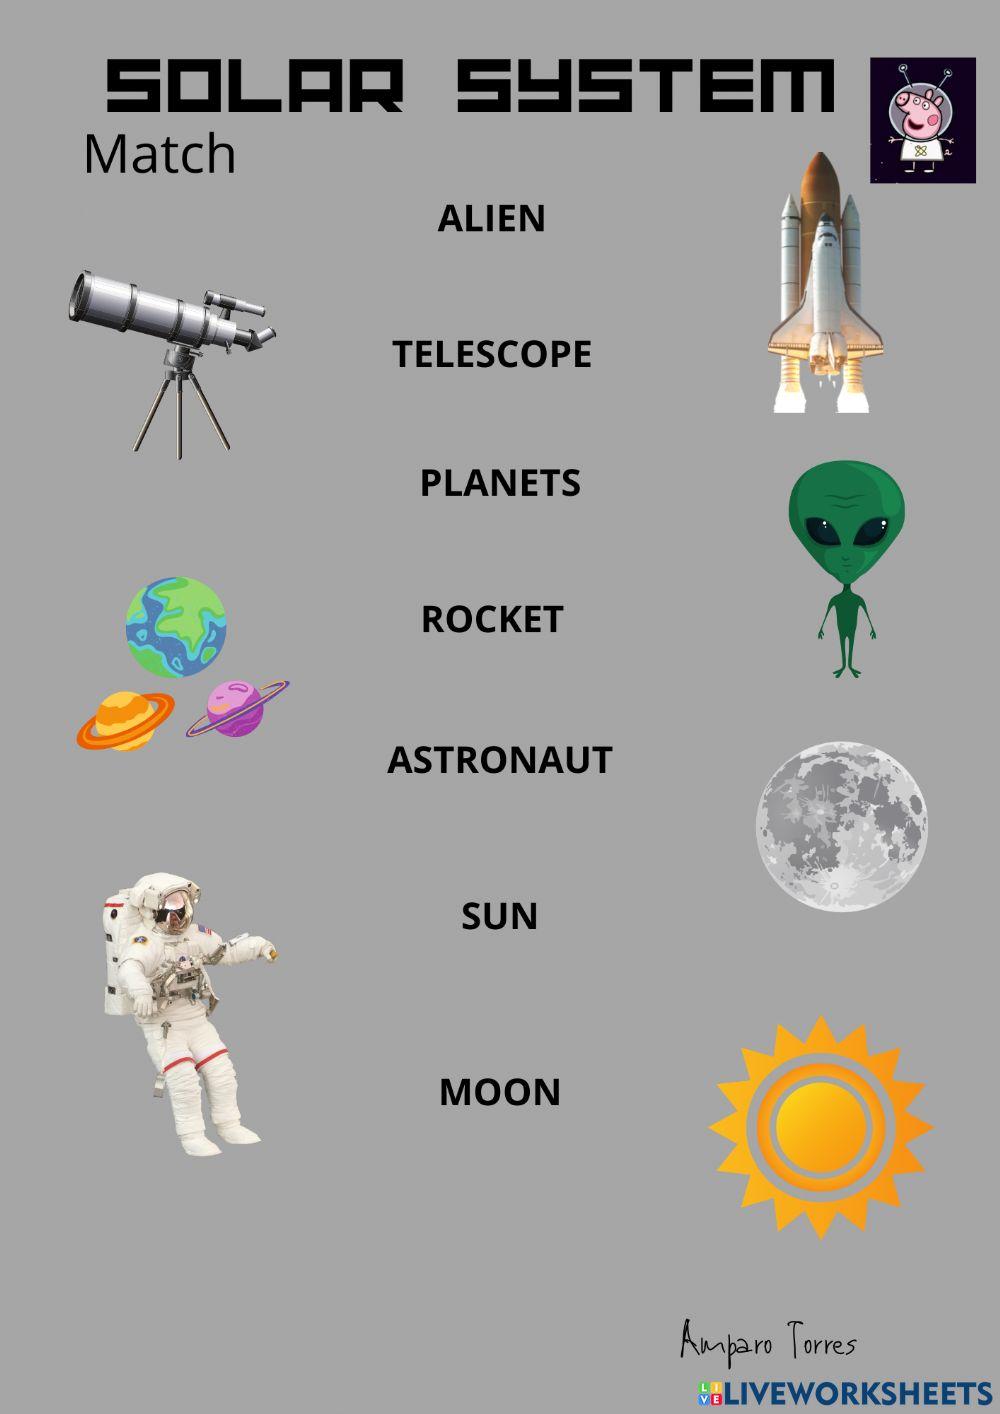 Solar system vocabulary